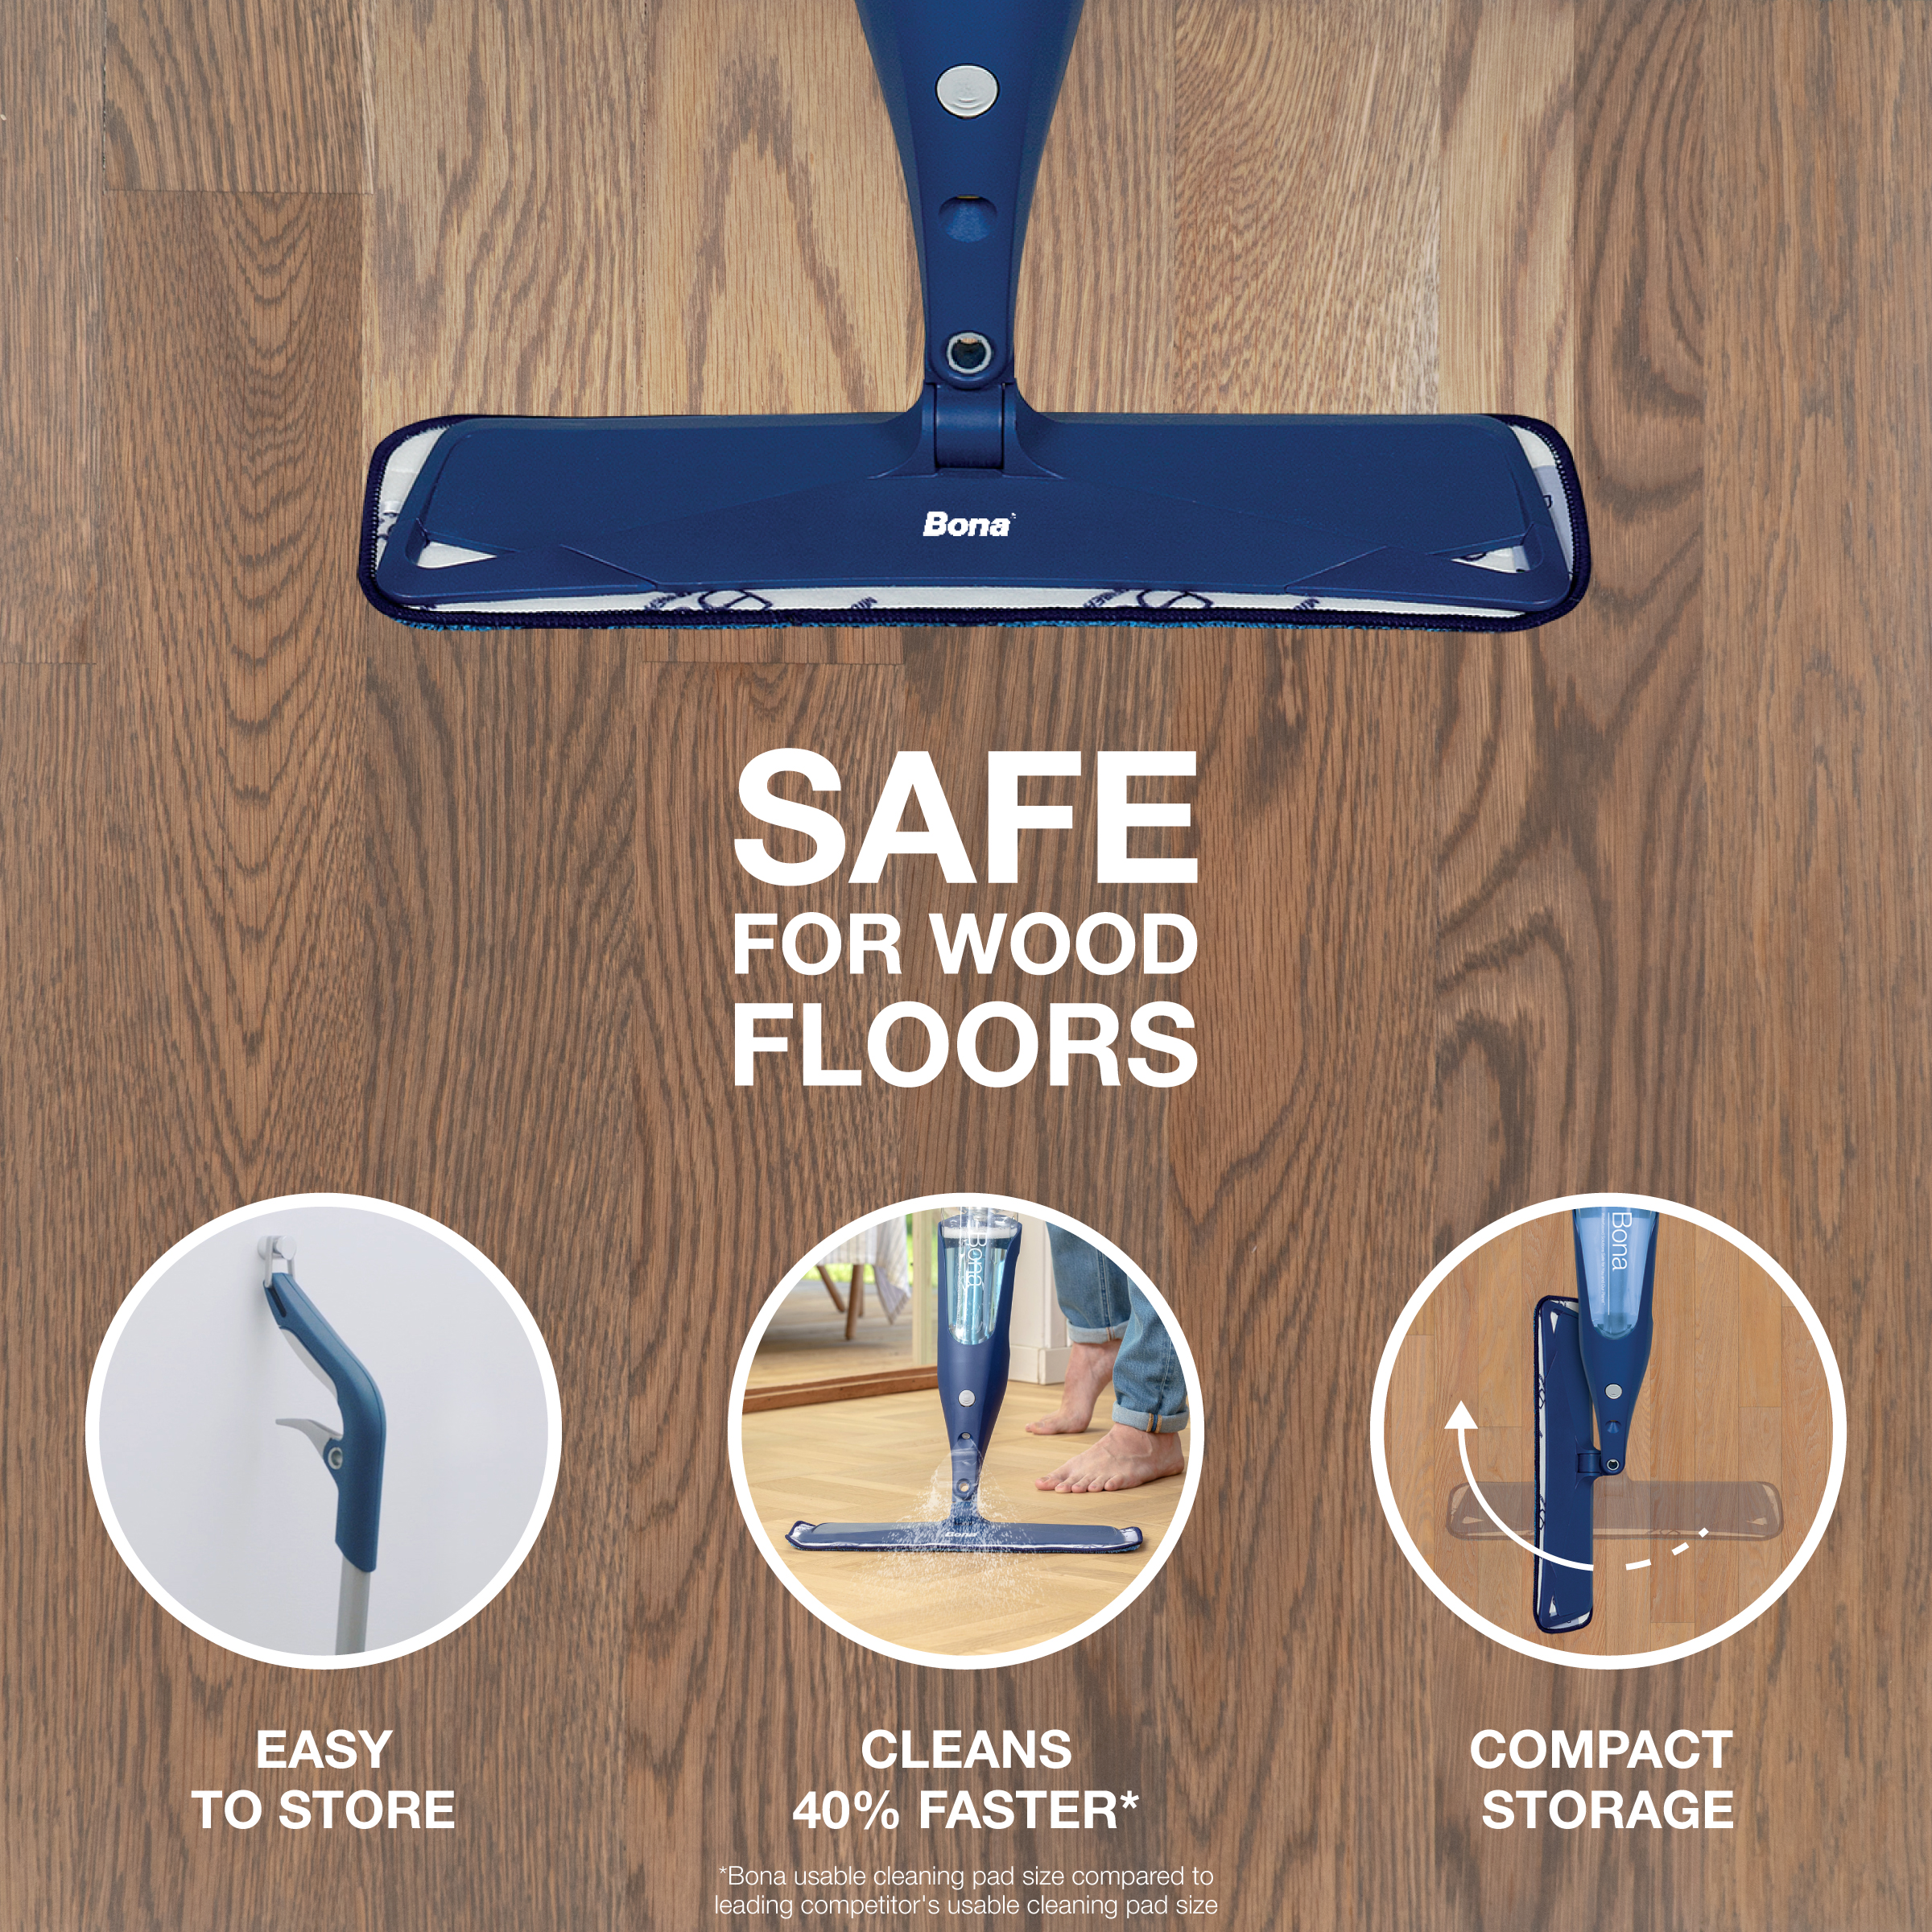 Bona Spray Mop for Hardwood Floors, with Refillable Cartridge & Washable Microfiber Pad - image 3 of 7